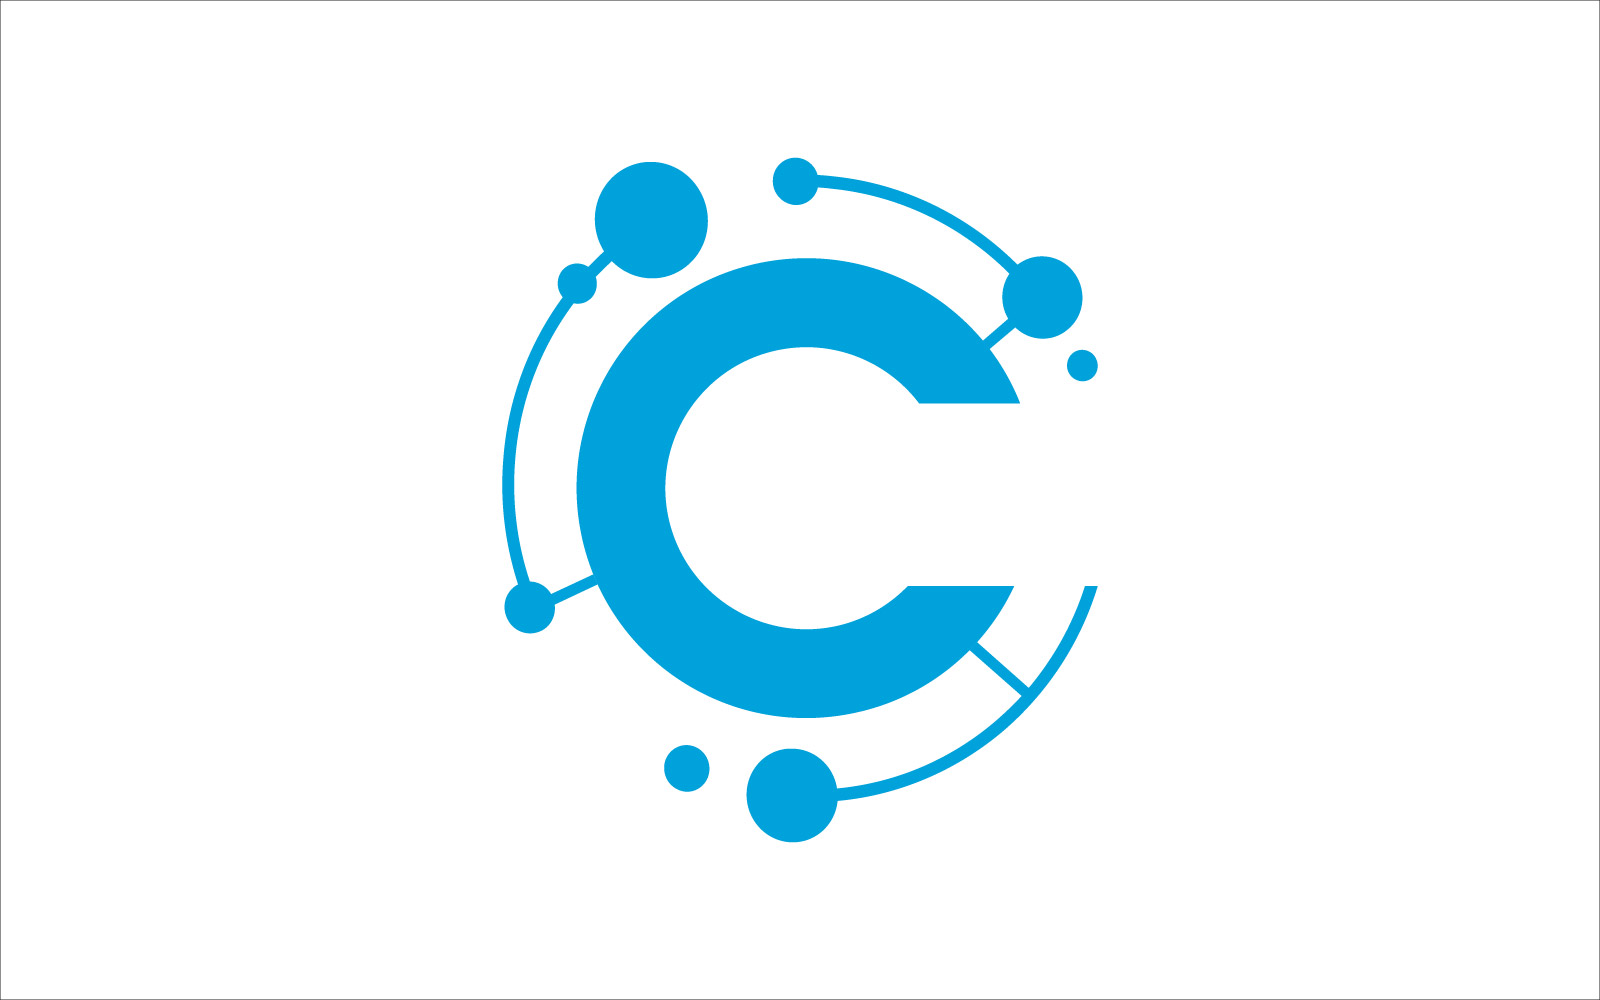 Letter C technology vector logo template